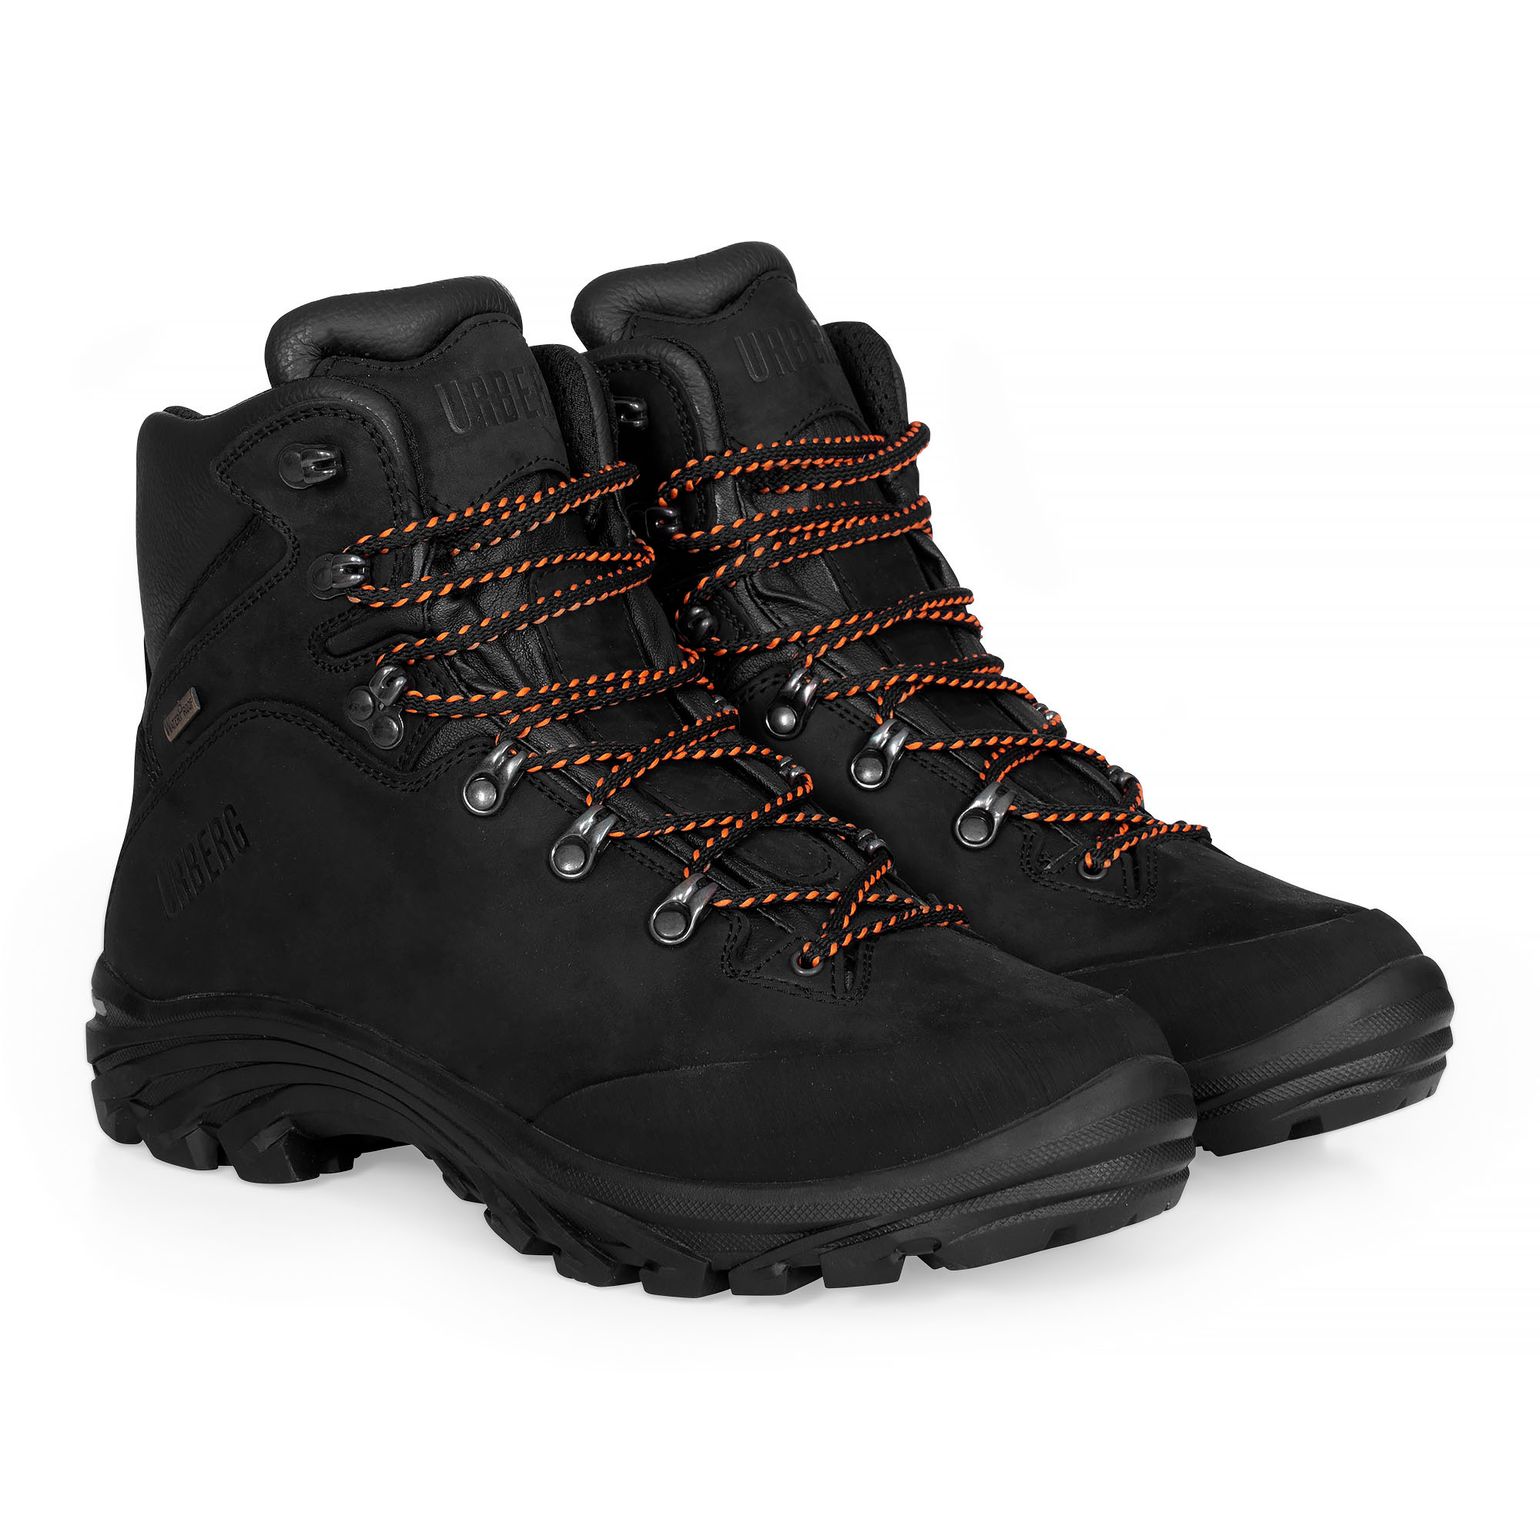 Urberg Men's Hiking Boot Black